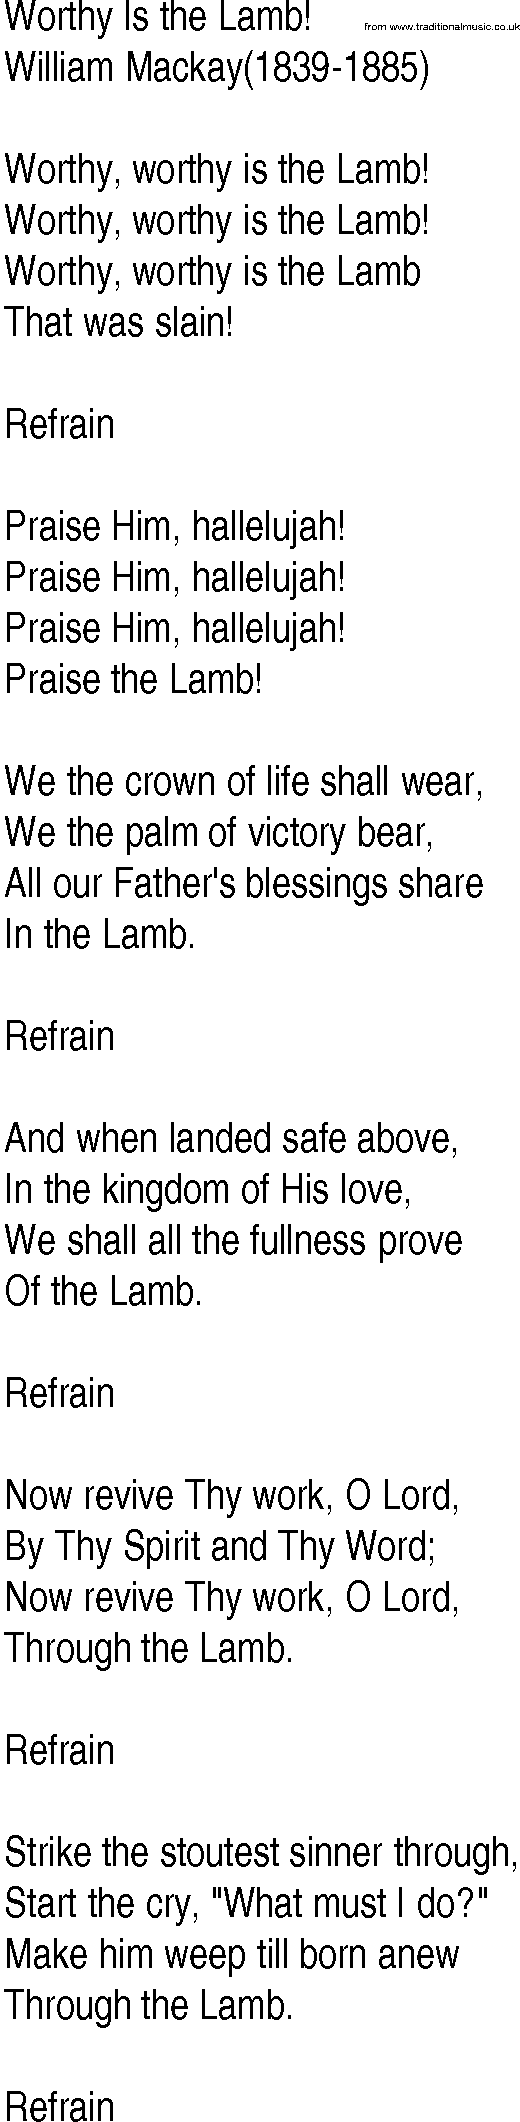 Hymn and Gospel Song: Worthy Is the Lamb! by William Mackay lyrics